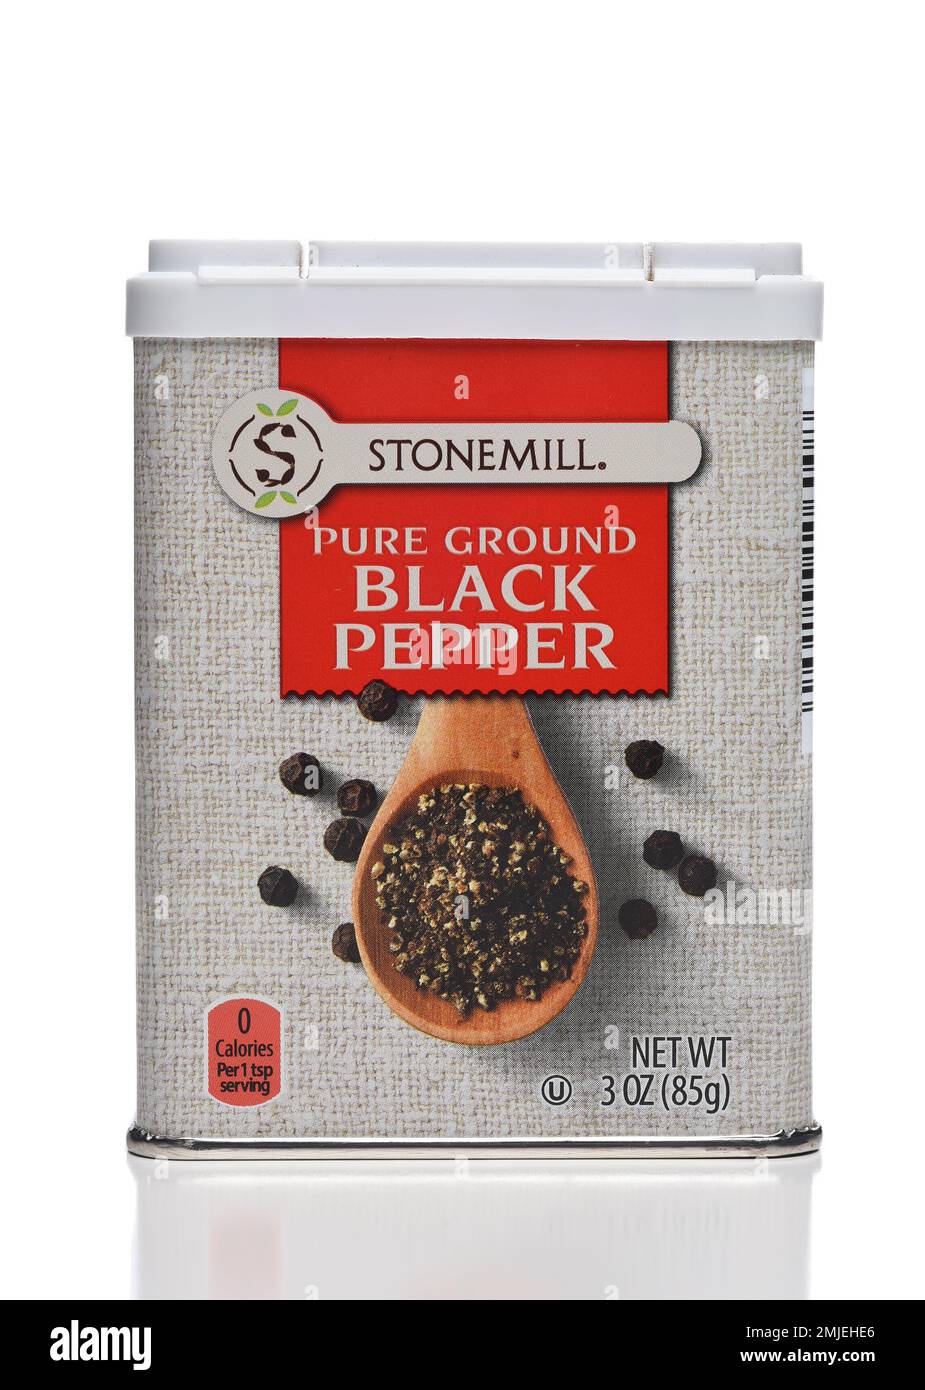 El Guapo® Ground Black Pepper (Pimienta Negra Molida)